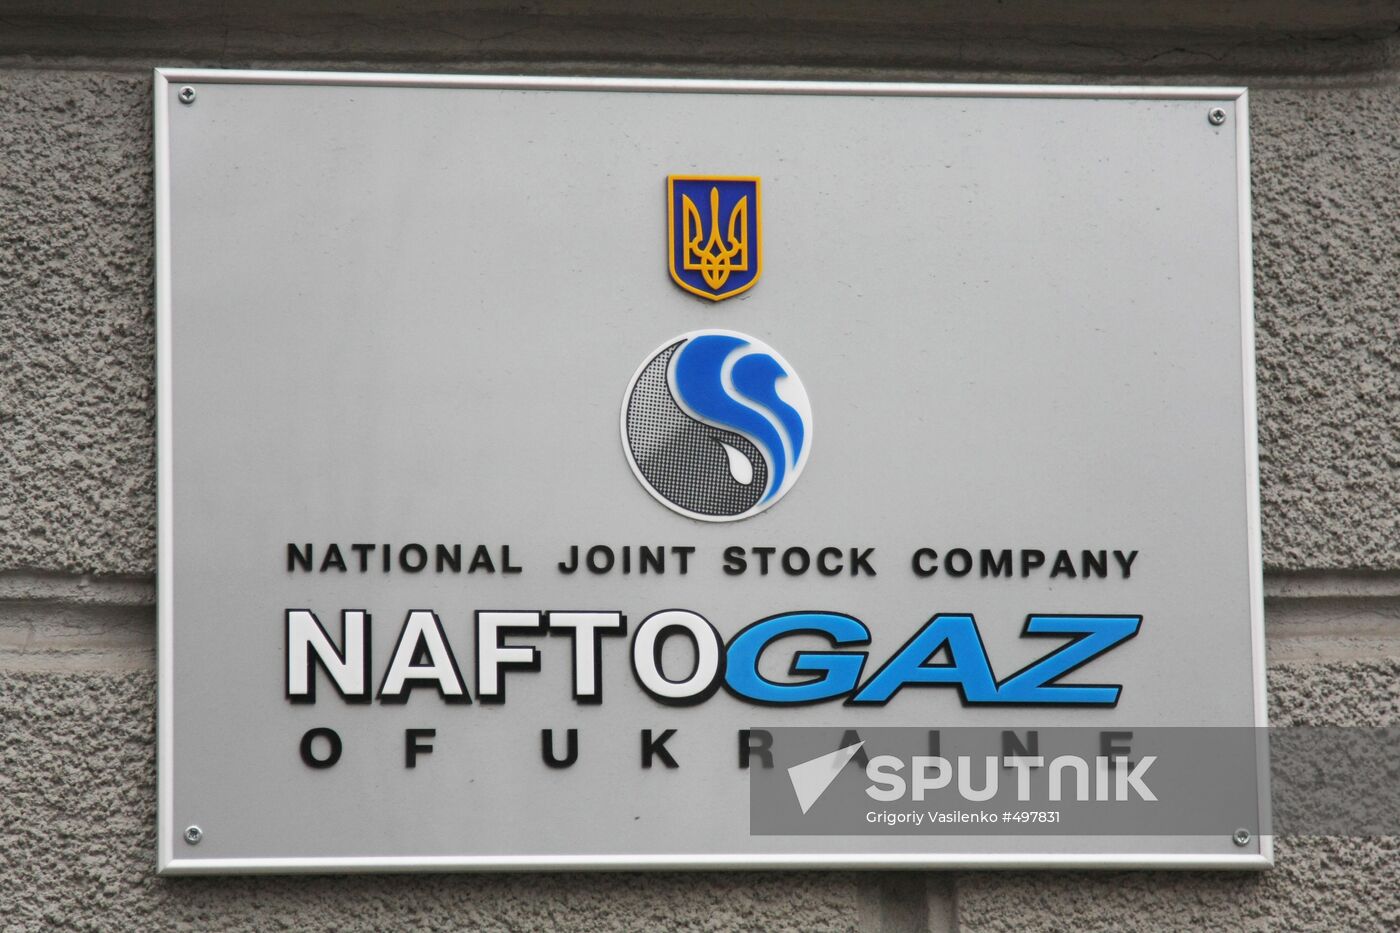 Naftogaz of Ukraine building plaque